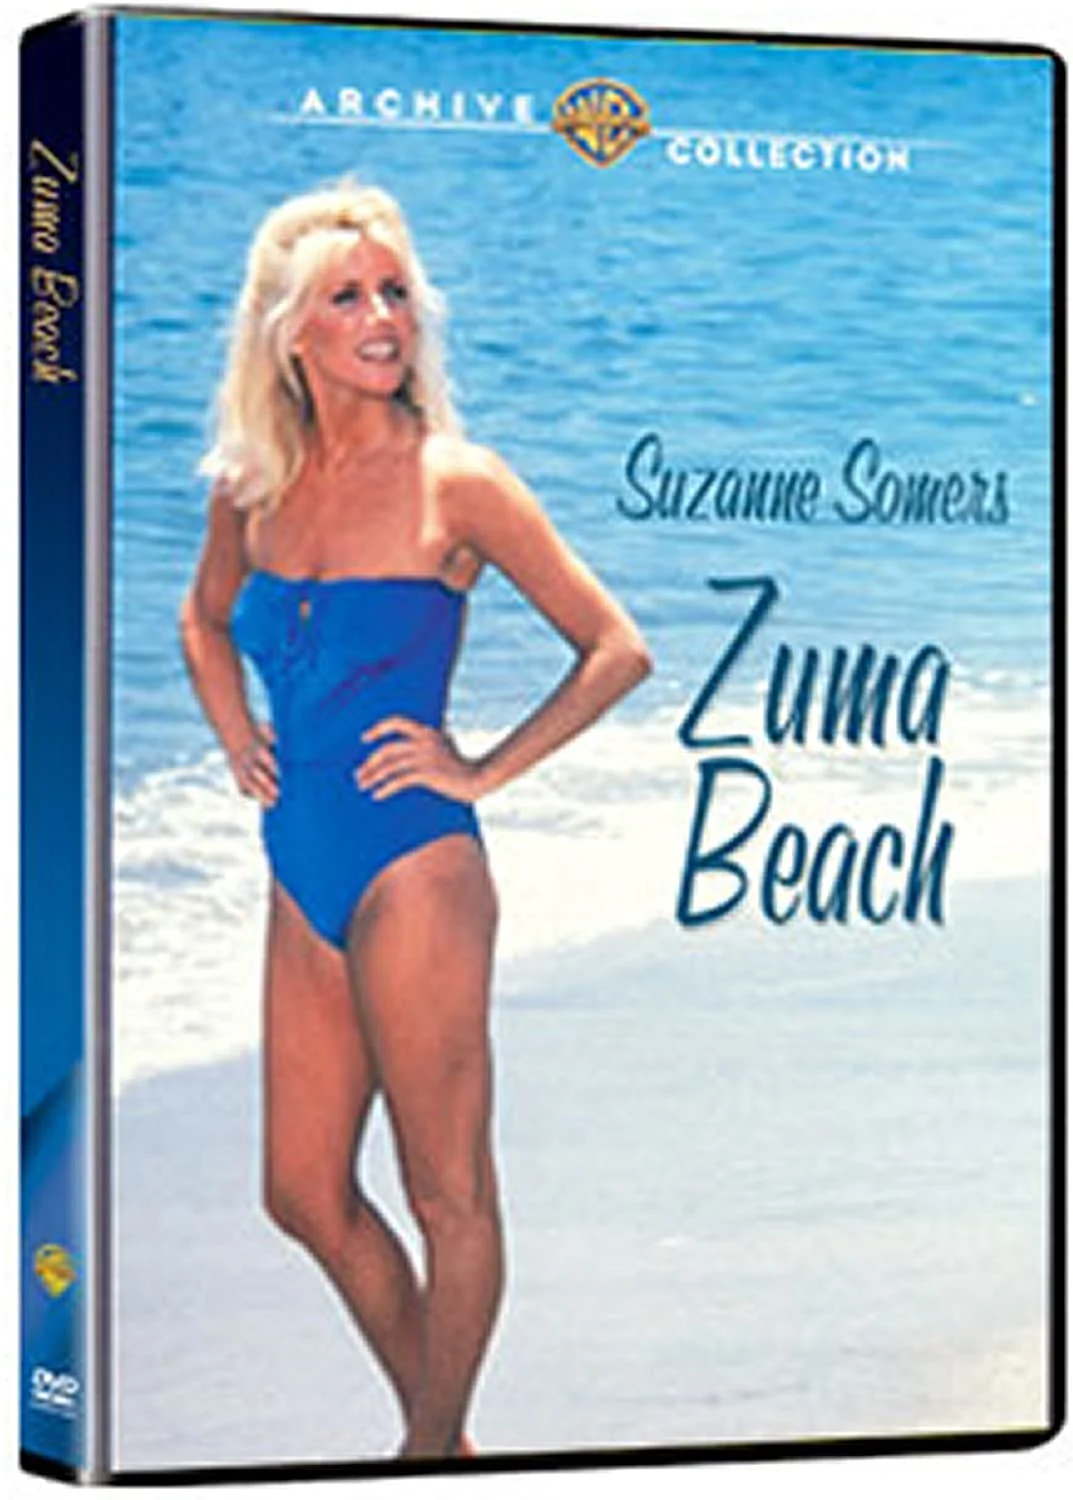 Zuma Beach (DVD) (MOD) on MovieShack